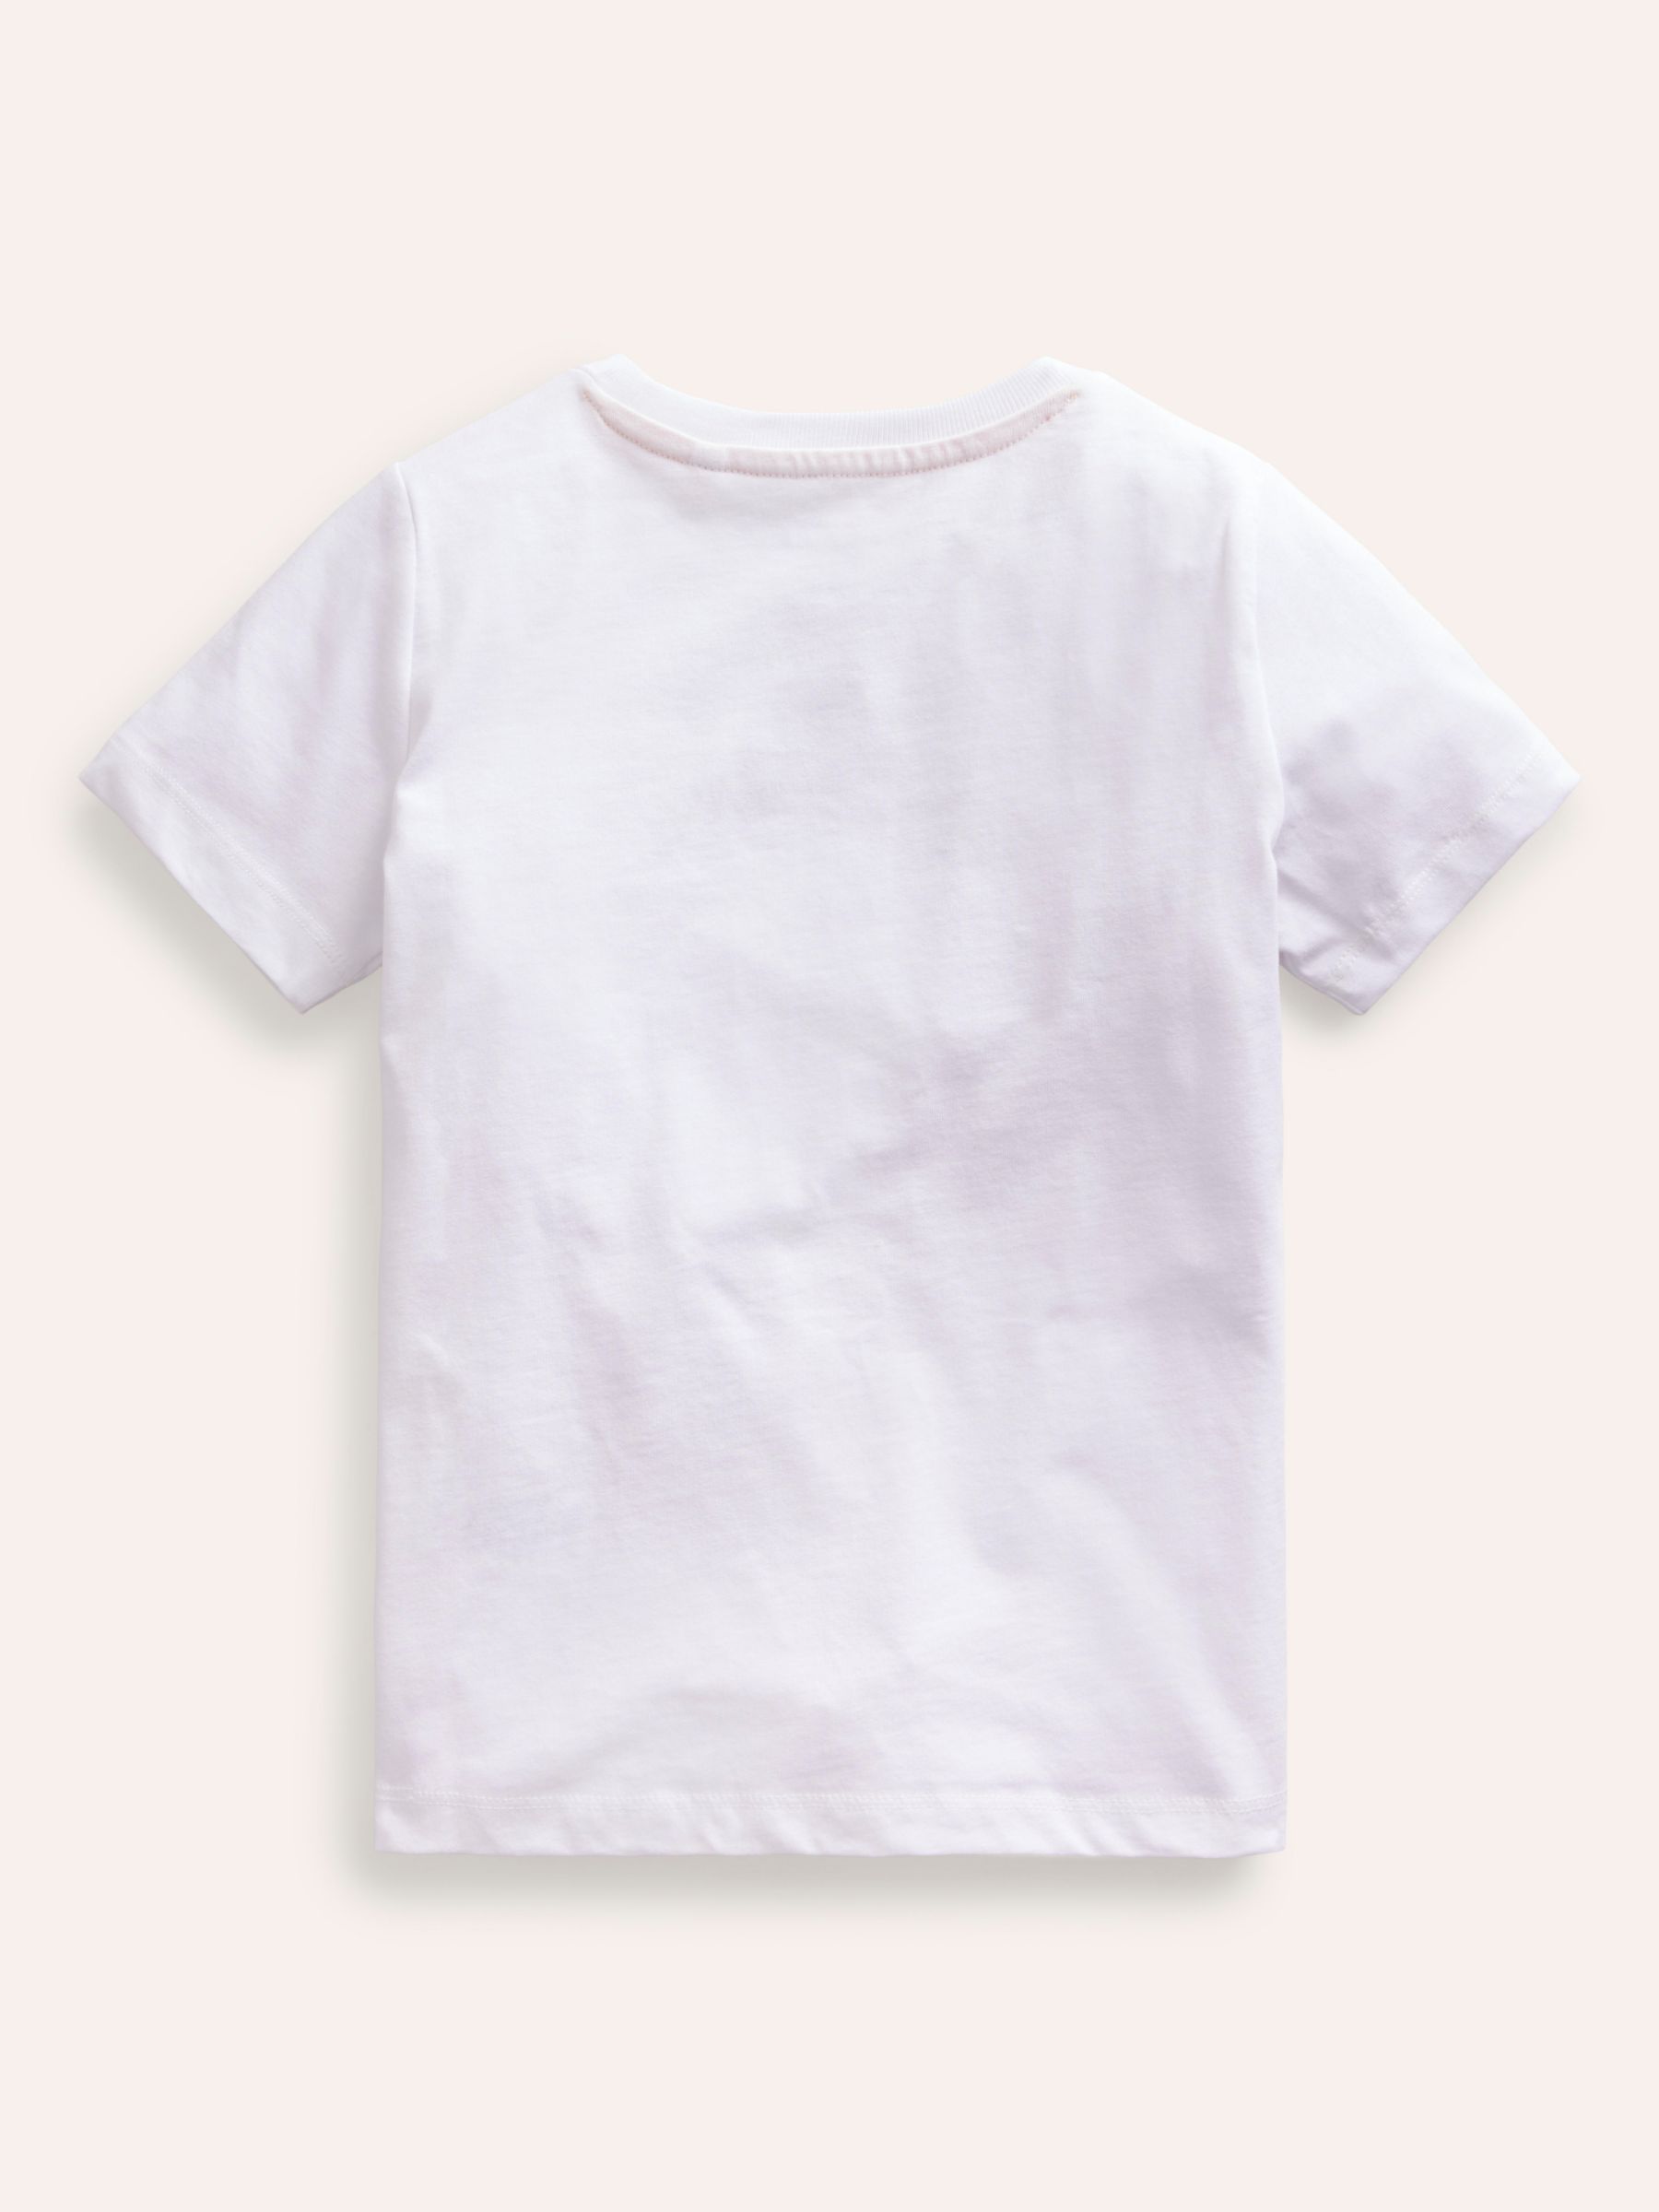 Mini Boden Kids' Ice Cream Print T-Shirt, White/Multi, 2-3Y